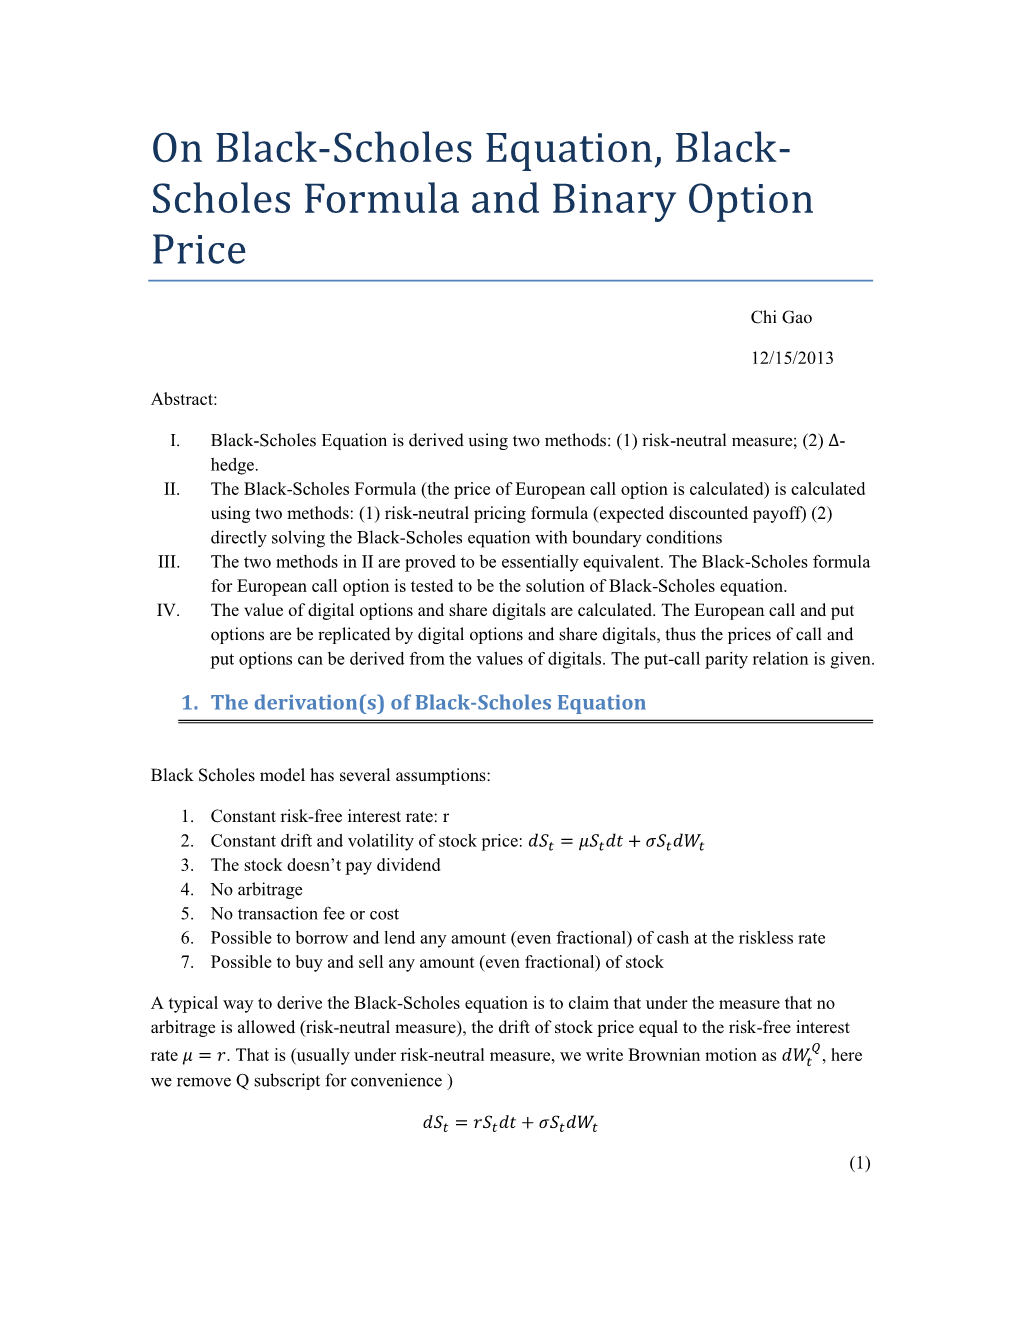 On Black-Scholes Equation, Black- Scholes Formula and Binary Option Price